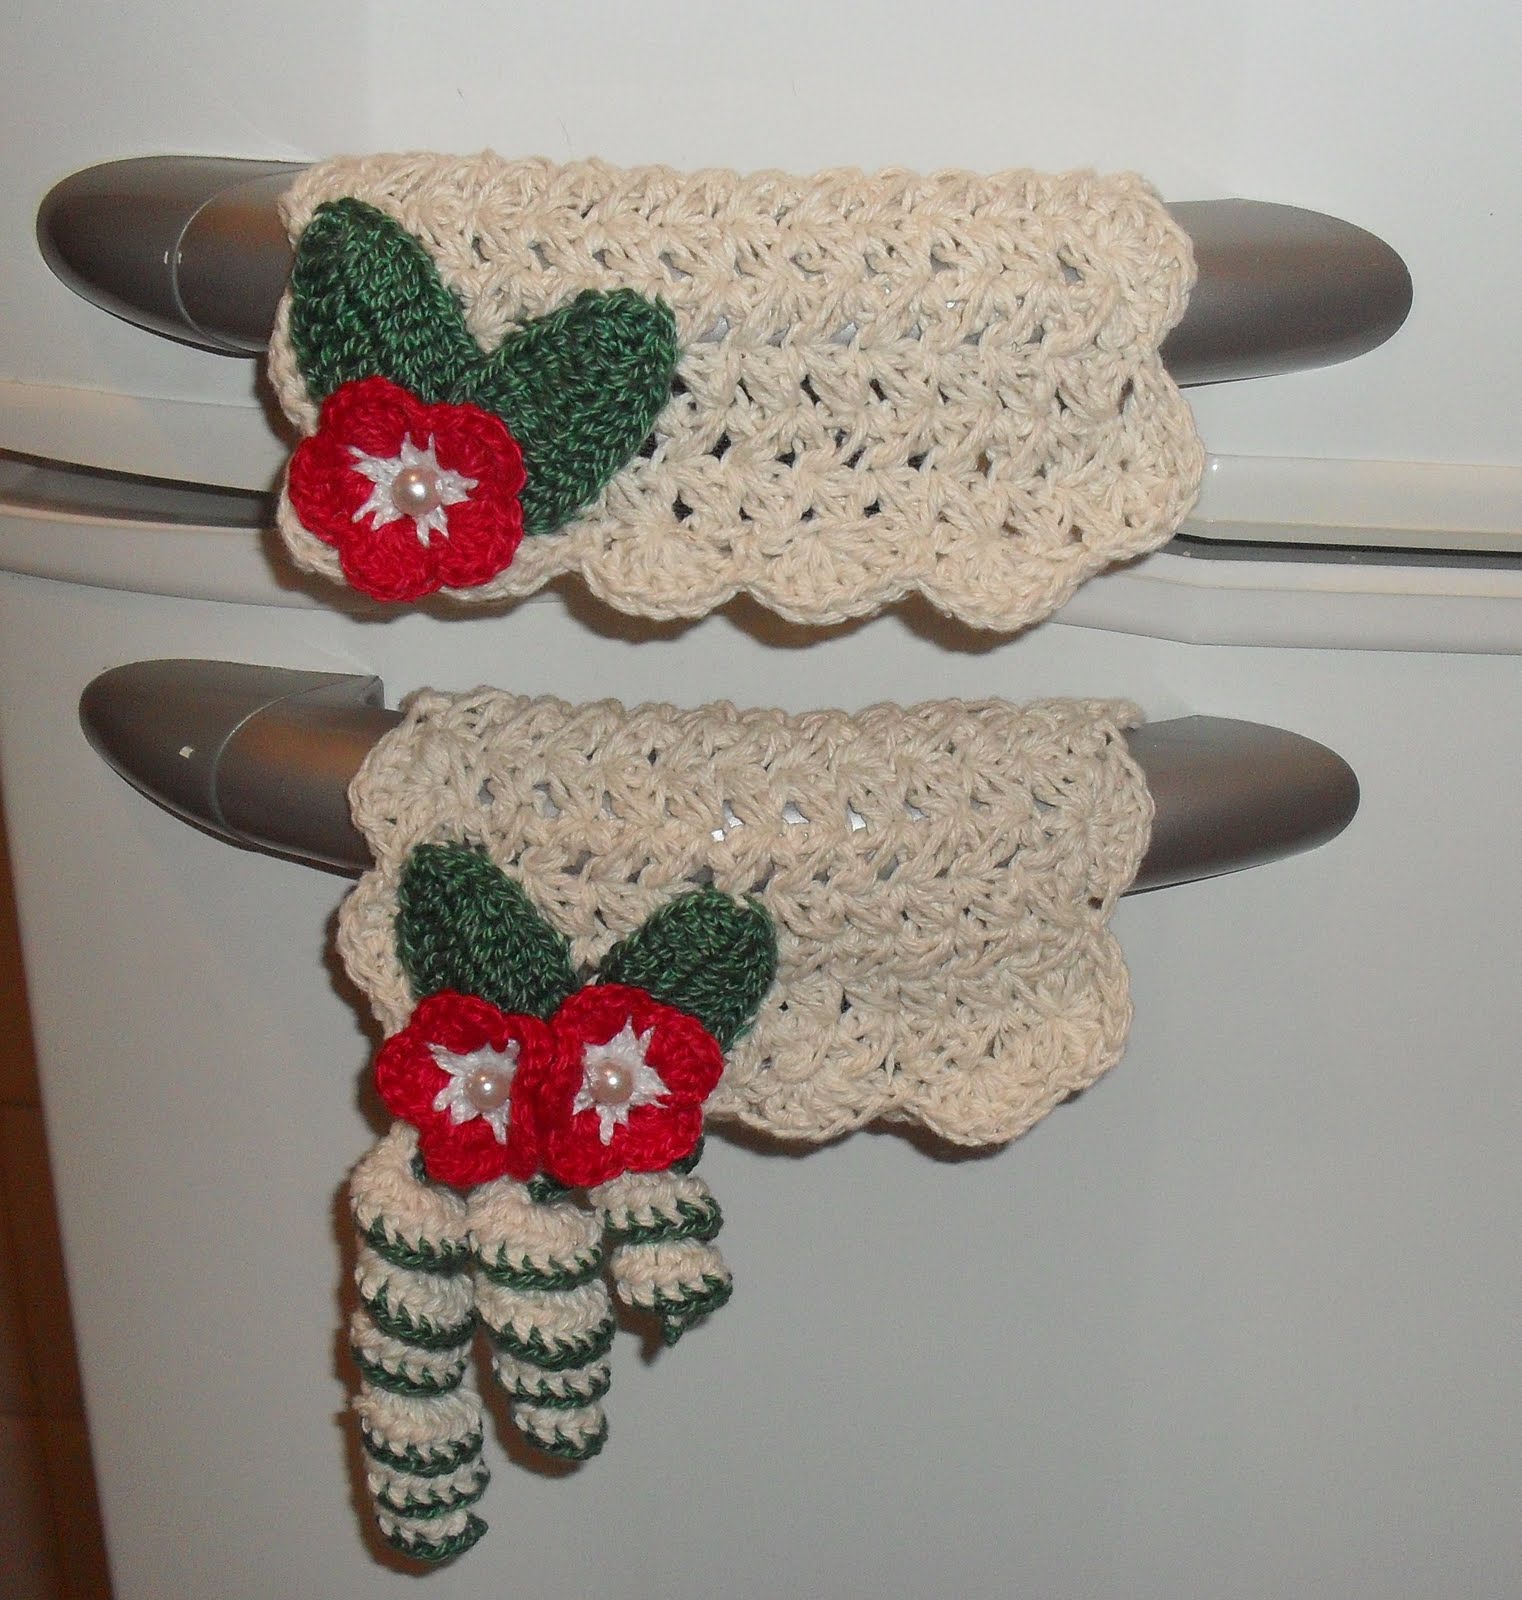 Crochet Refrigerator Holder: Step by step